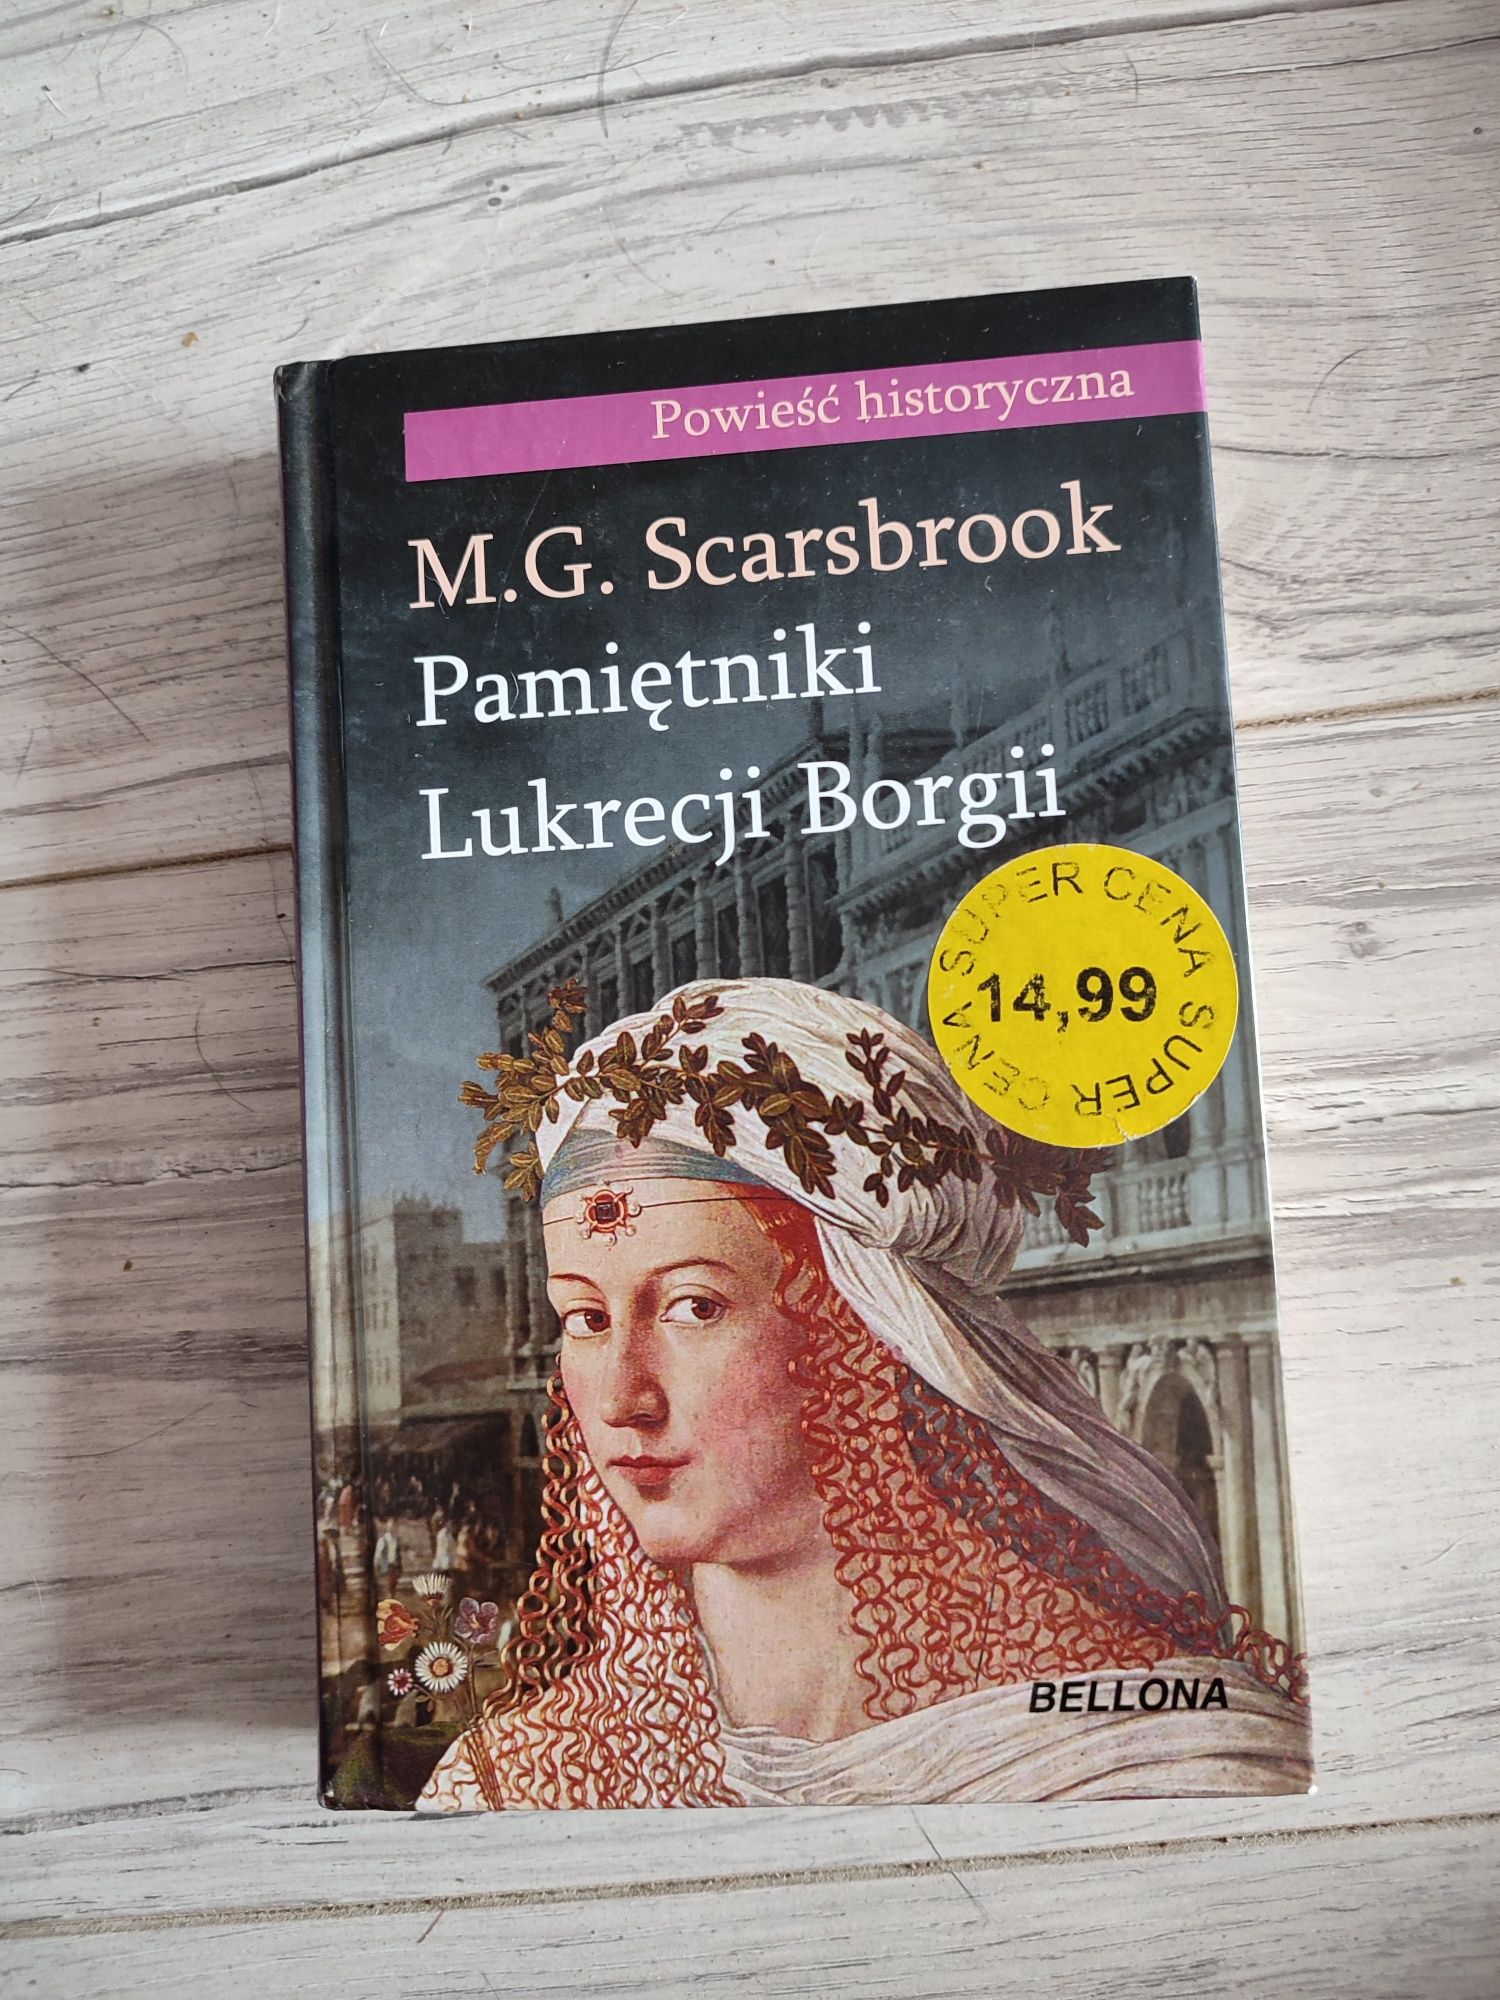 Scarsbrook M.G. Pamiętniki Lukrecji Borgii